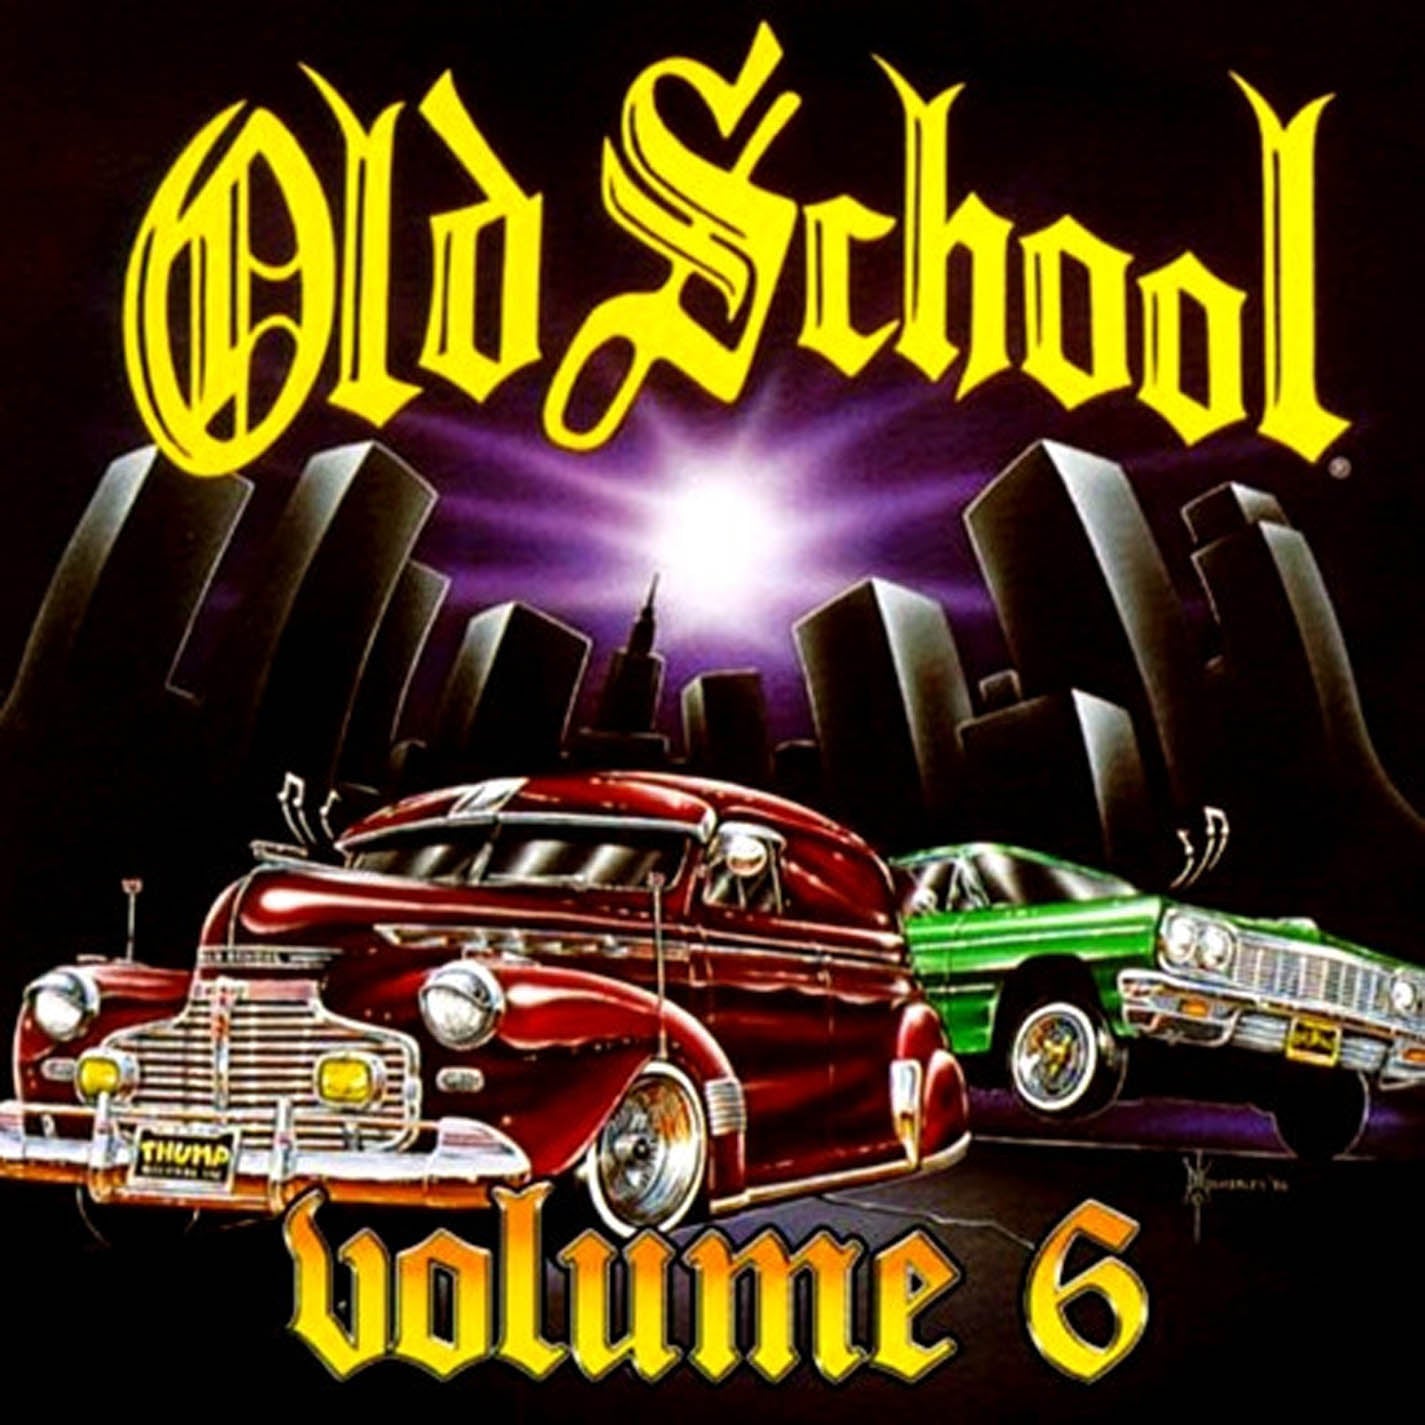 OLD SCHOOL - VOLUME 6 (CD LP) c1978 -